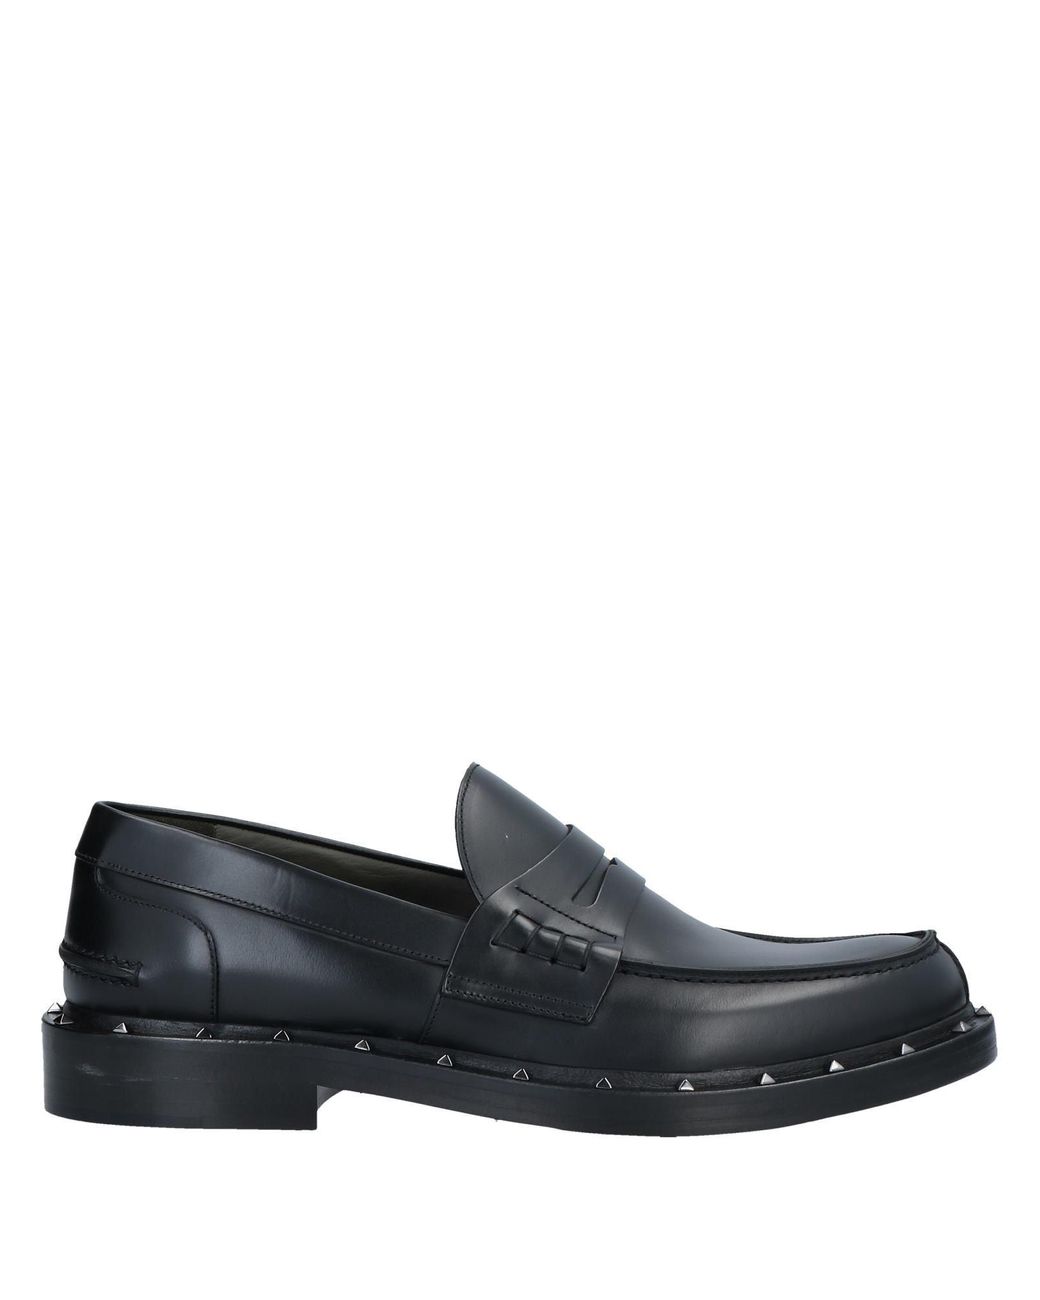 Valentino Garavani Leather Loafer in Black for Men - Lyst